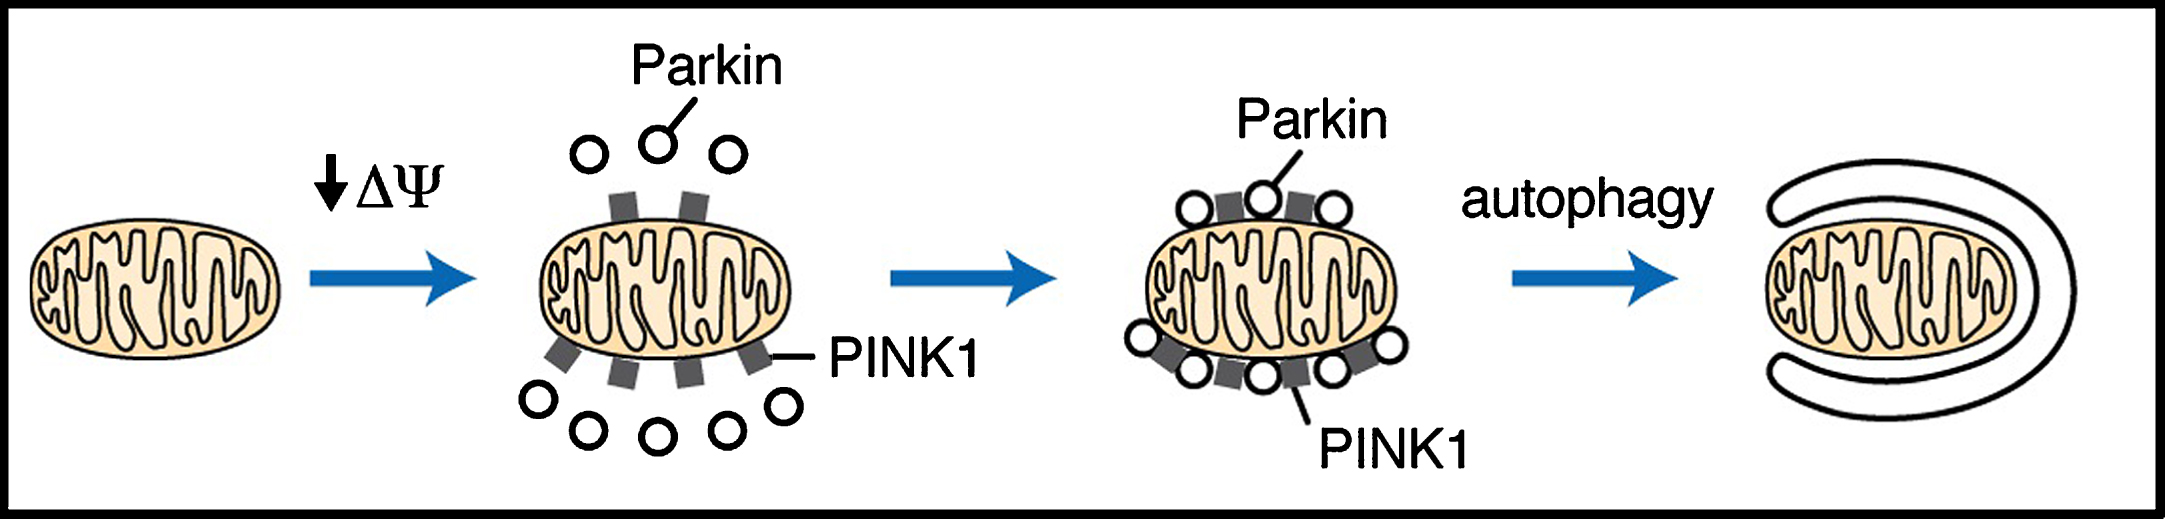 Parkin and PINK1 work together to remove dysfunctional mitochondria. Source: Matthew Goldberg, PhD, University of Alabama, Birmingham [14].